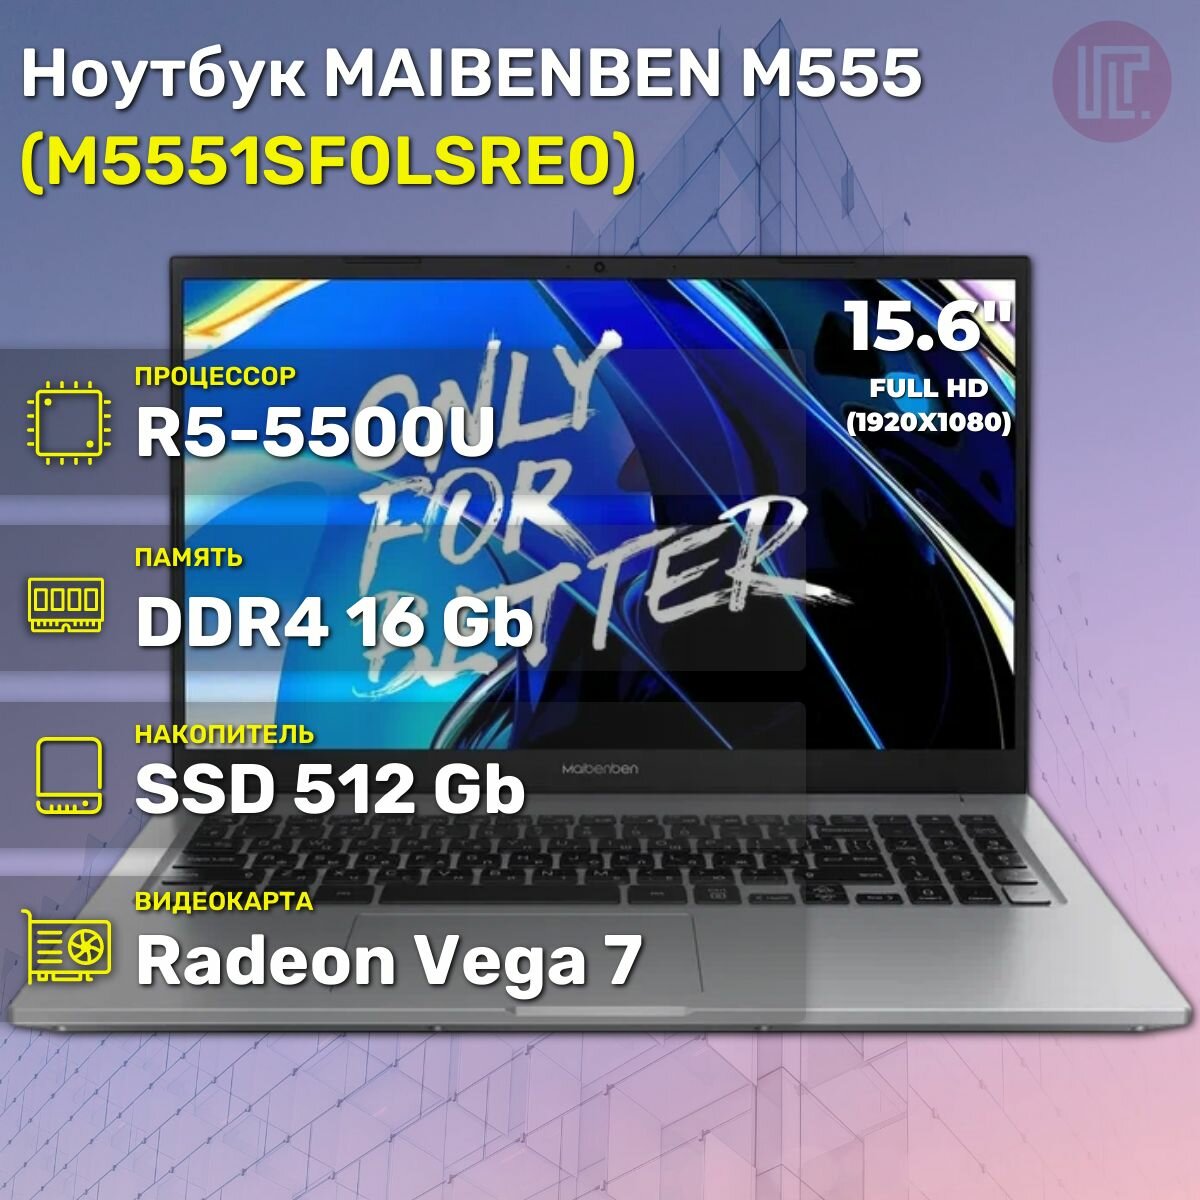 Ноутбук MAIBENBEN M555 Ryzen5-5500U/16GB/512GB SSD/156" FHD IPS/Linux Silver (M5551SF0LSRE0)